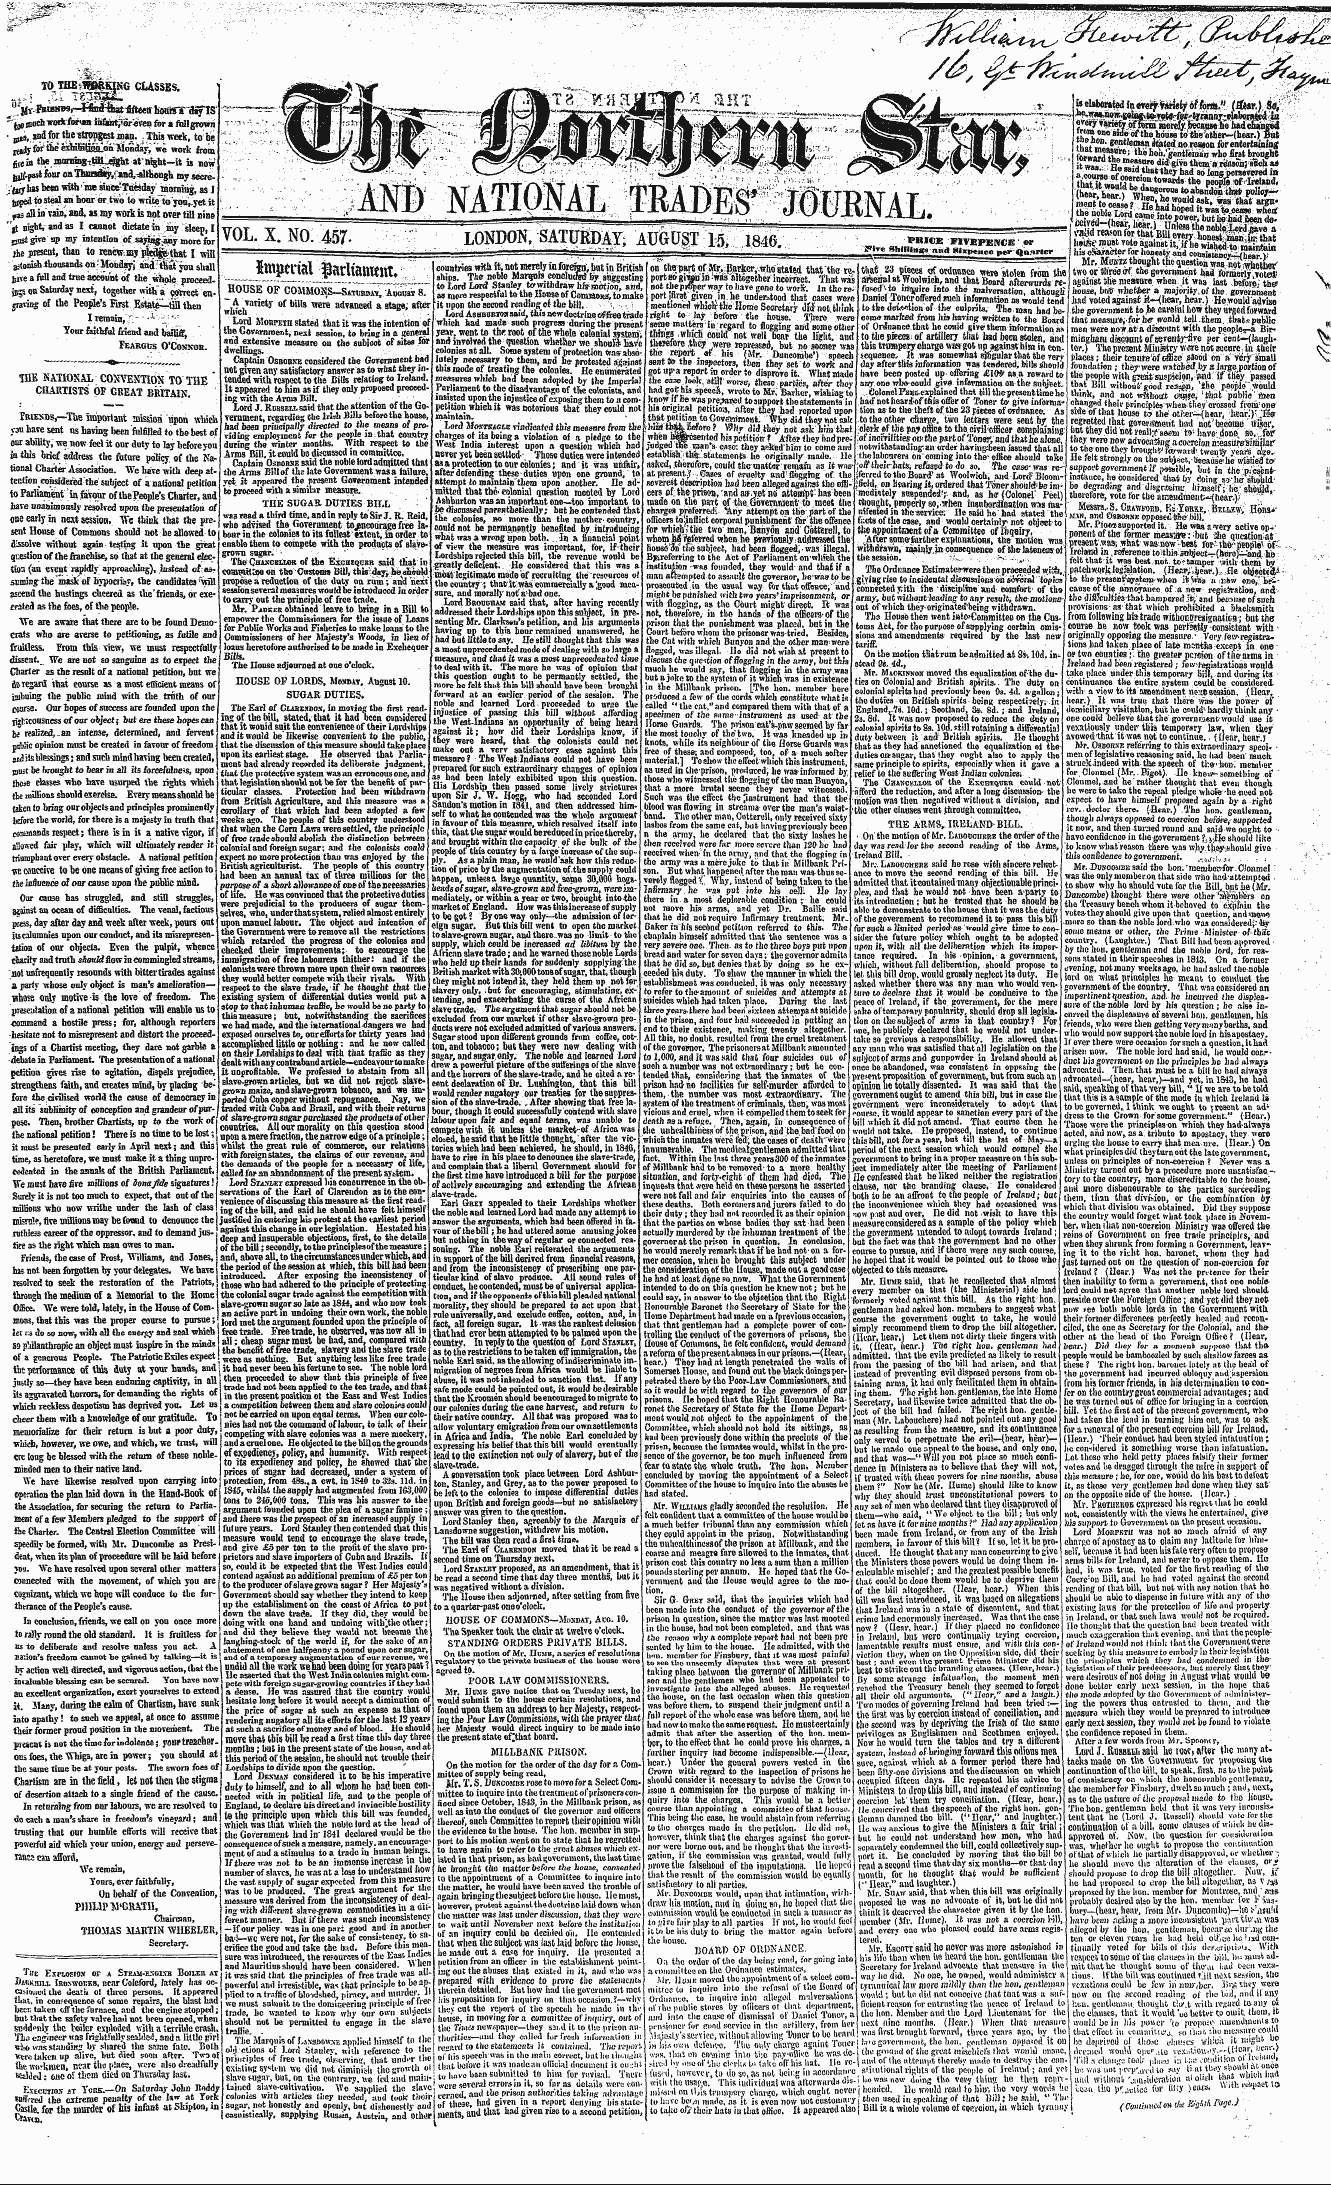 Northern Star (1837-1852): jS F Y, 3rd edition - Feio Much "Wffl-K'For-An Ihfeht ~ !Or-Ev...